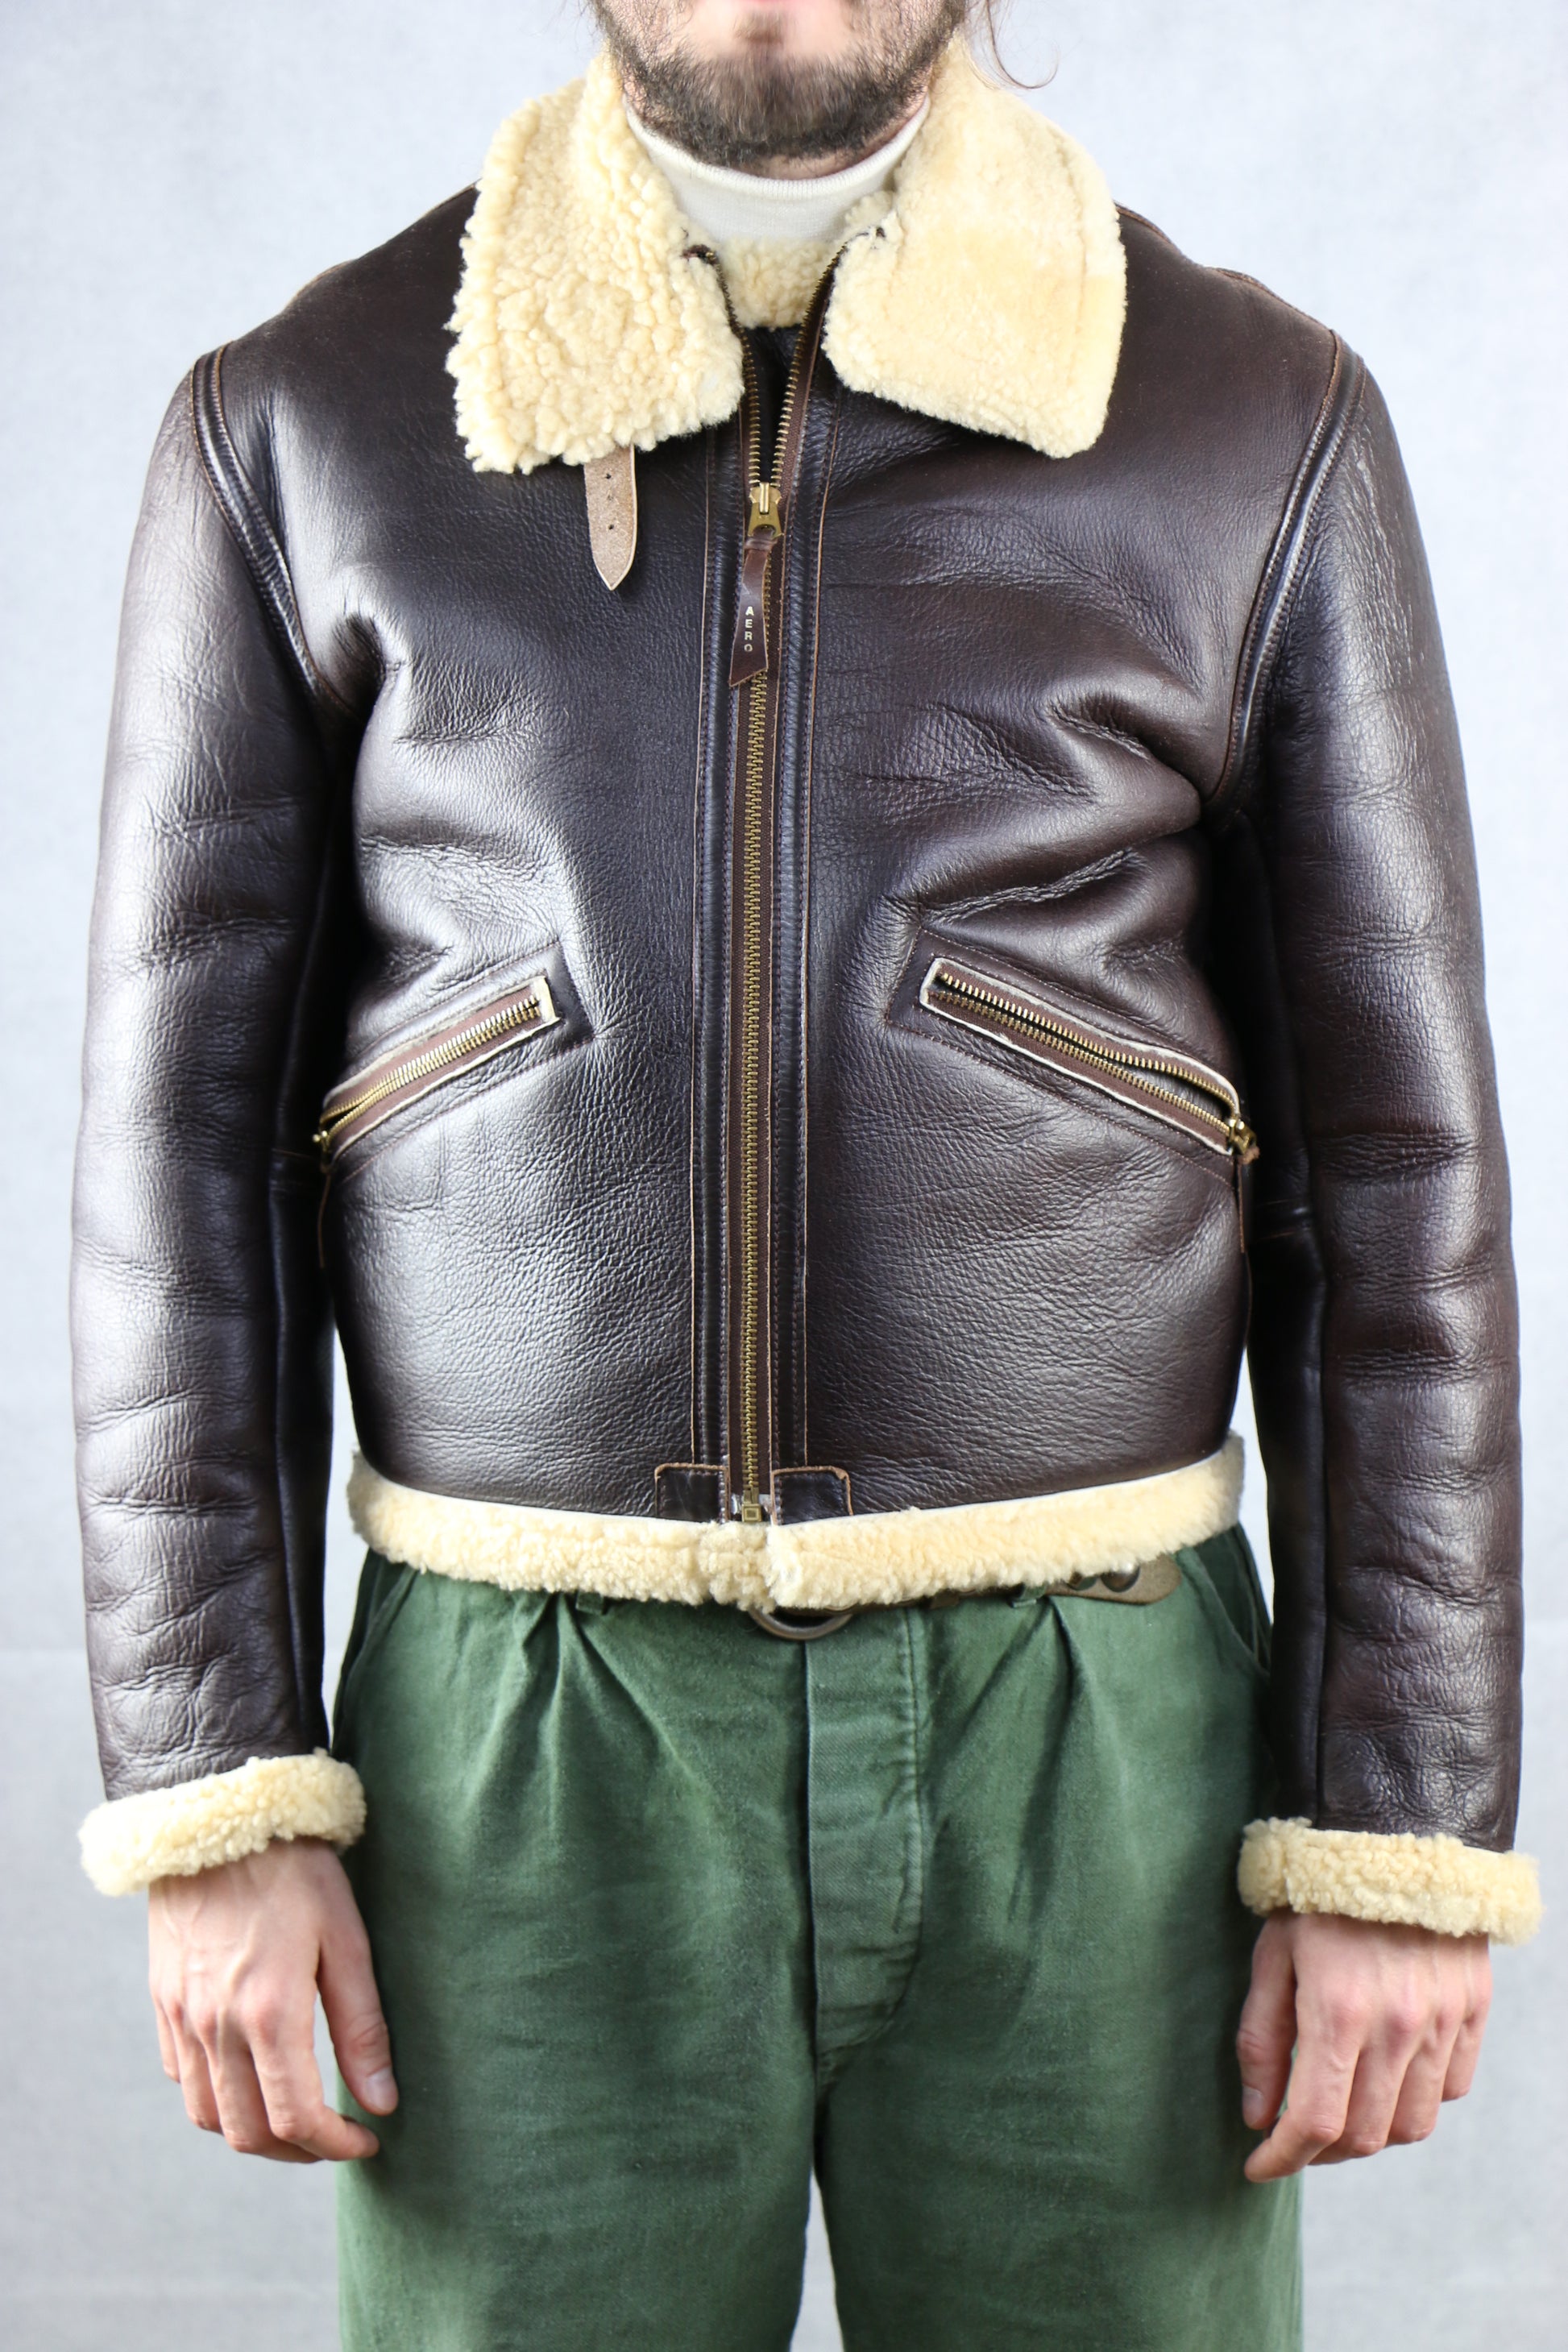 Aero Leather D-1 Jacket - vintage clothing clochard92.com